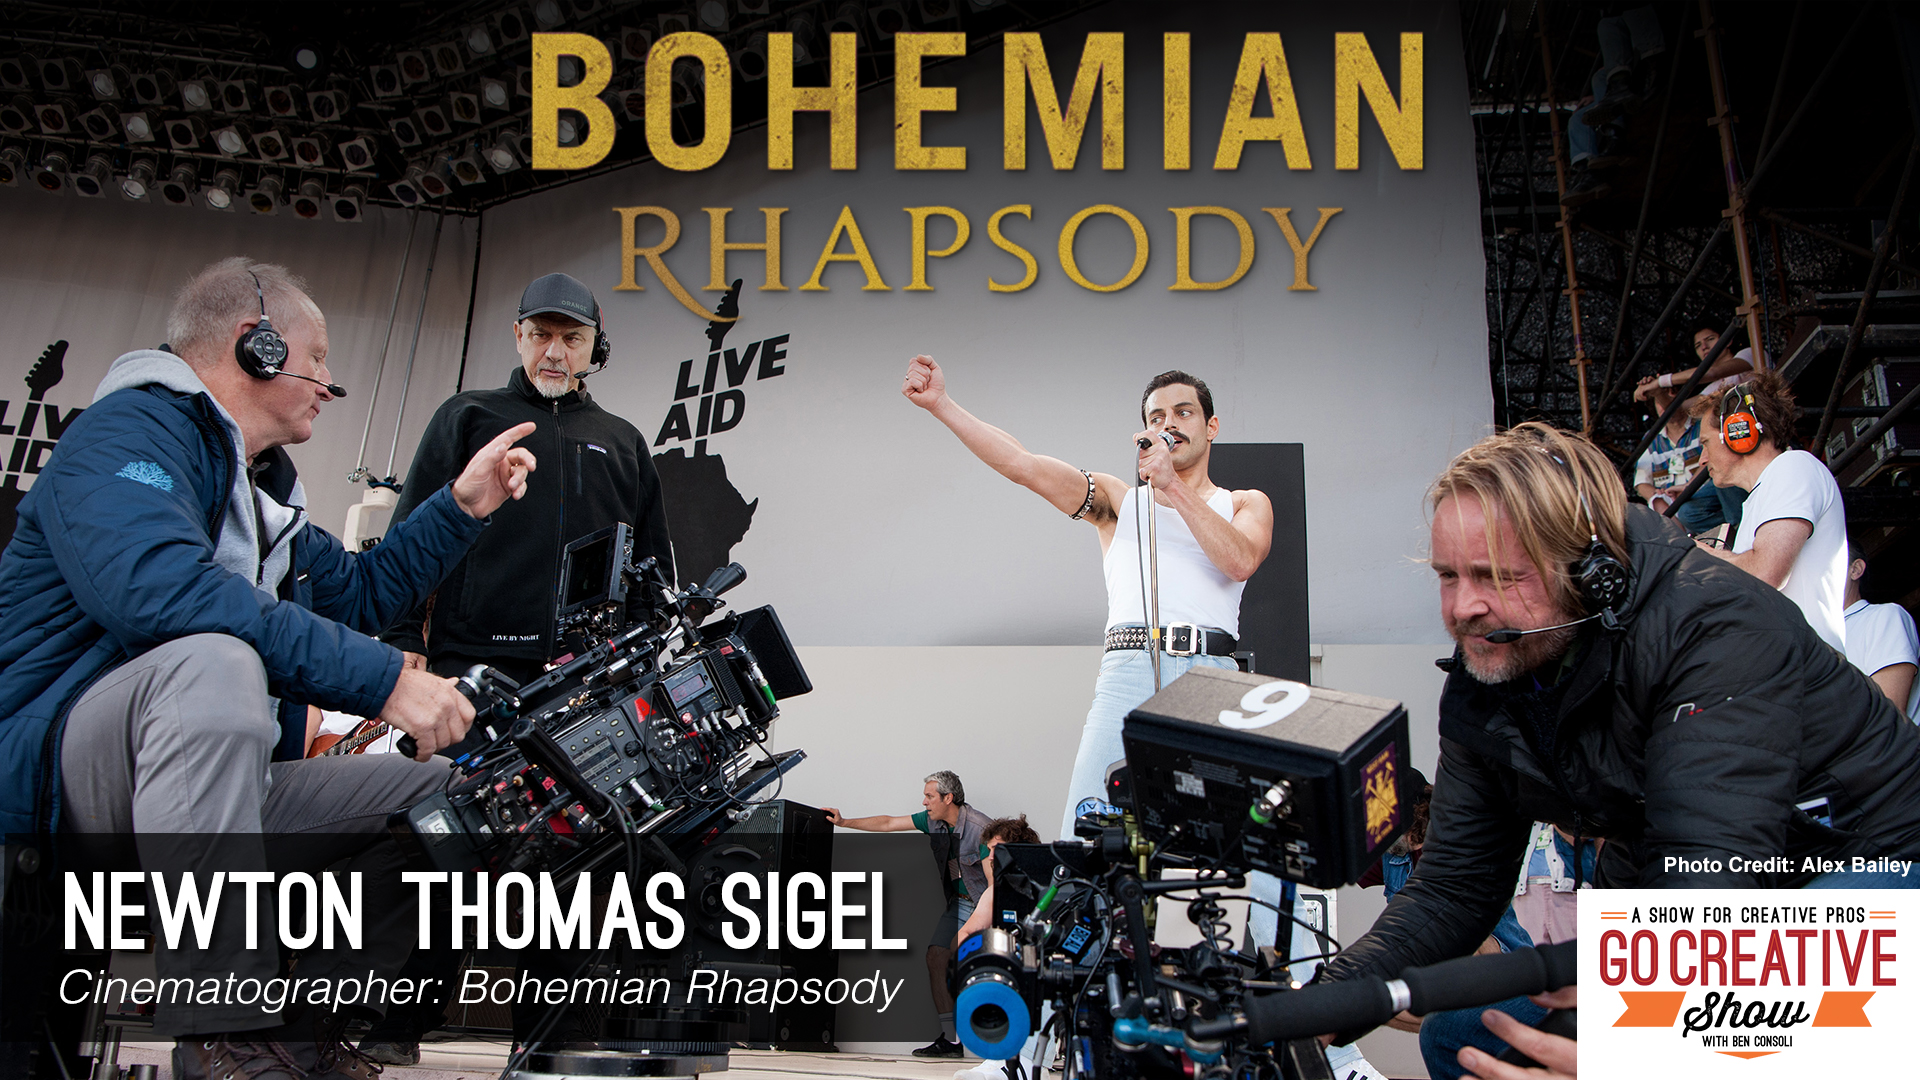 Newton Thomas Sigel on the Cinematography of Bohemian Rhapsody